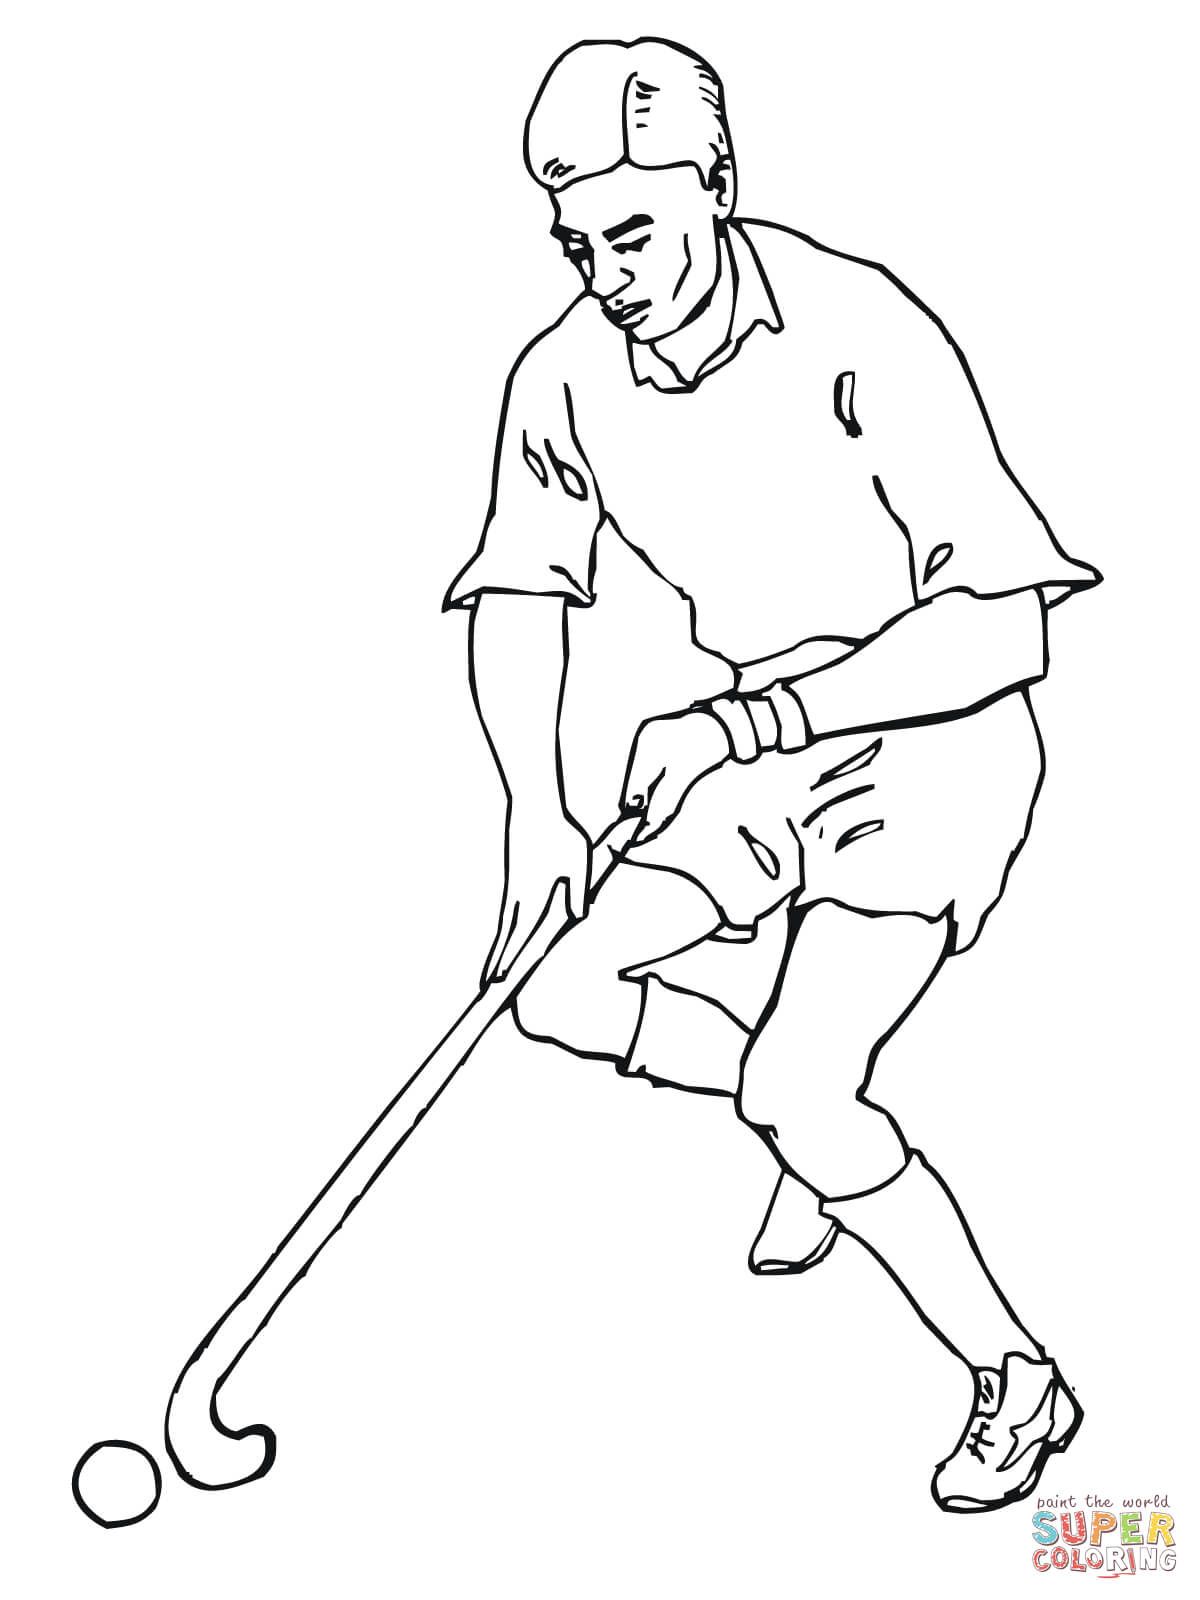 Discover 83+ hockey sketch images super hot 